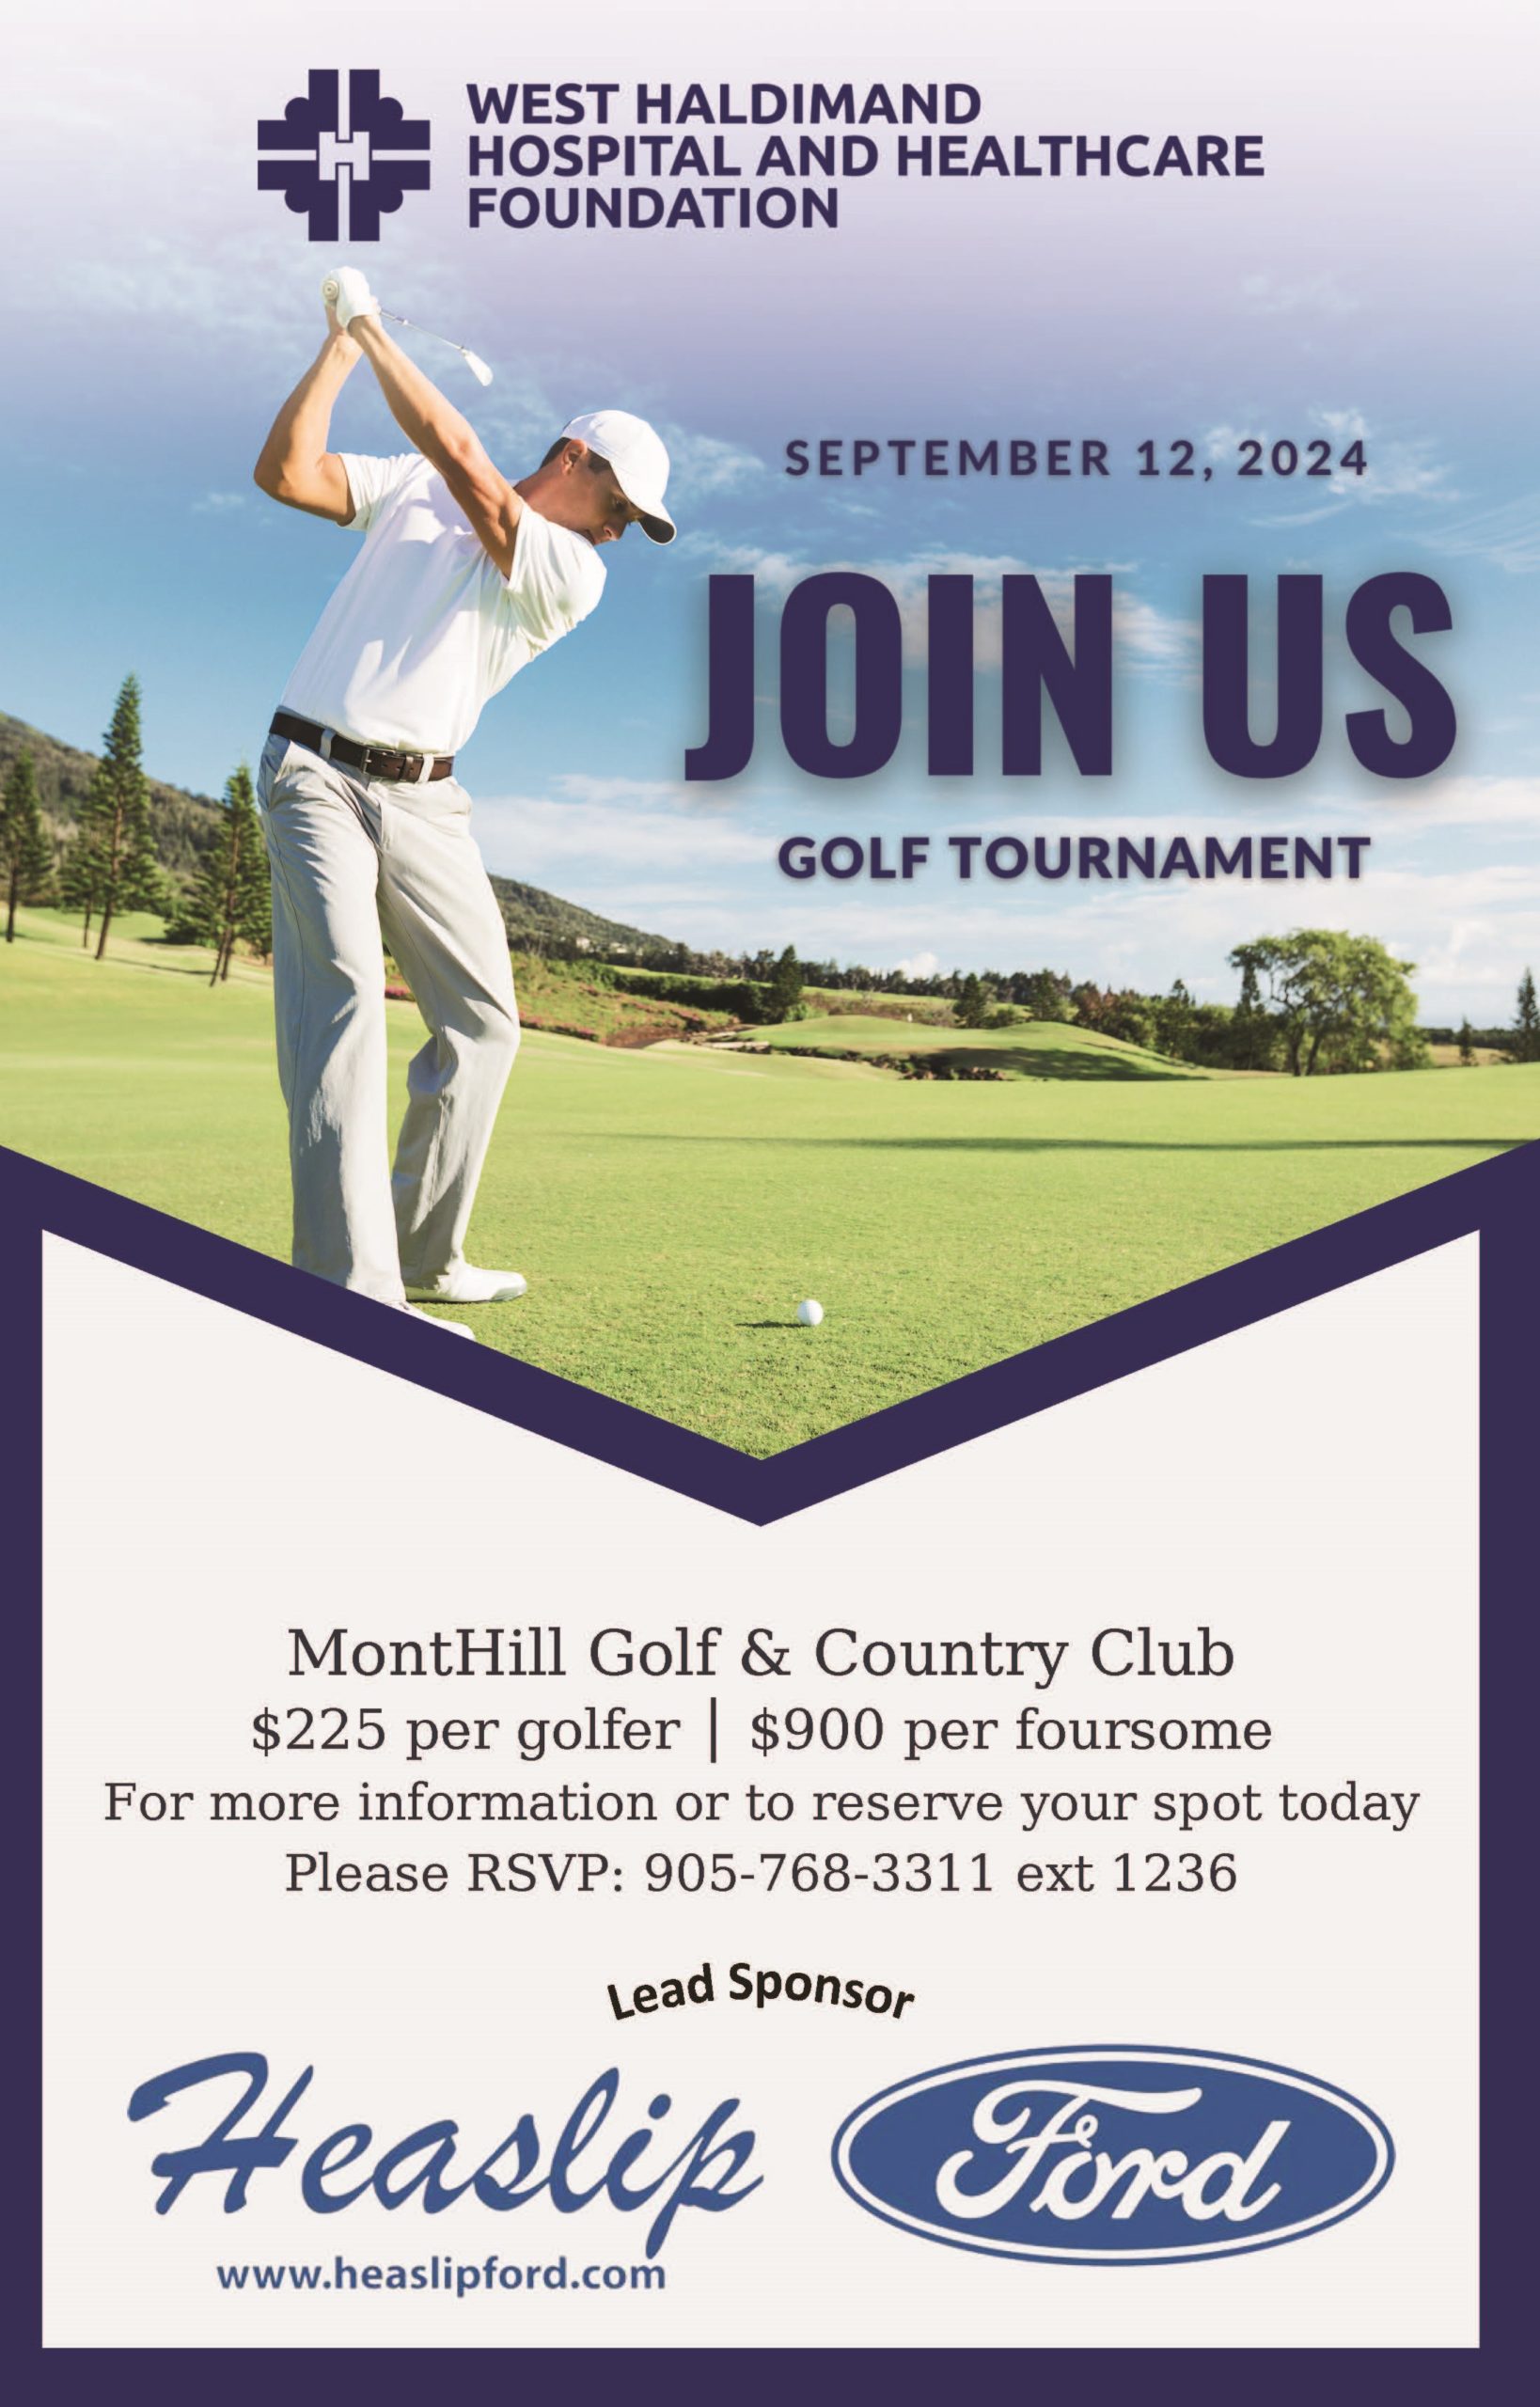 Draw to participate in golf tournament